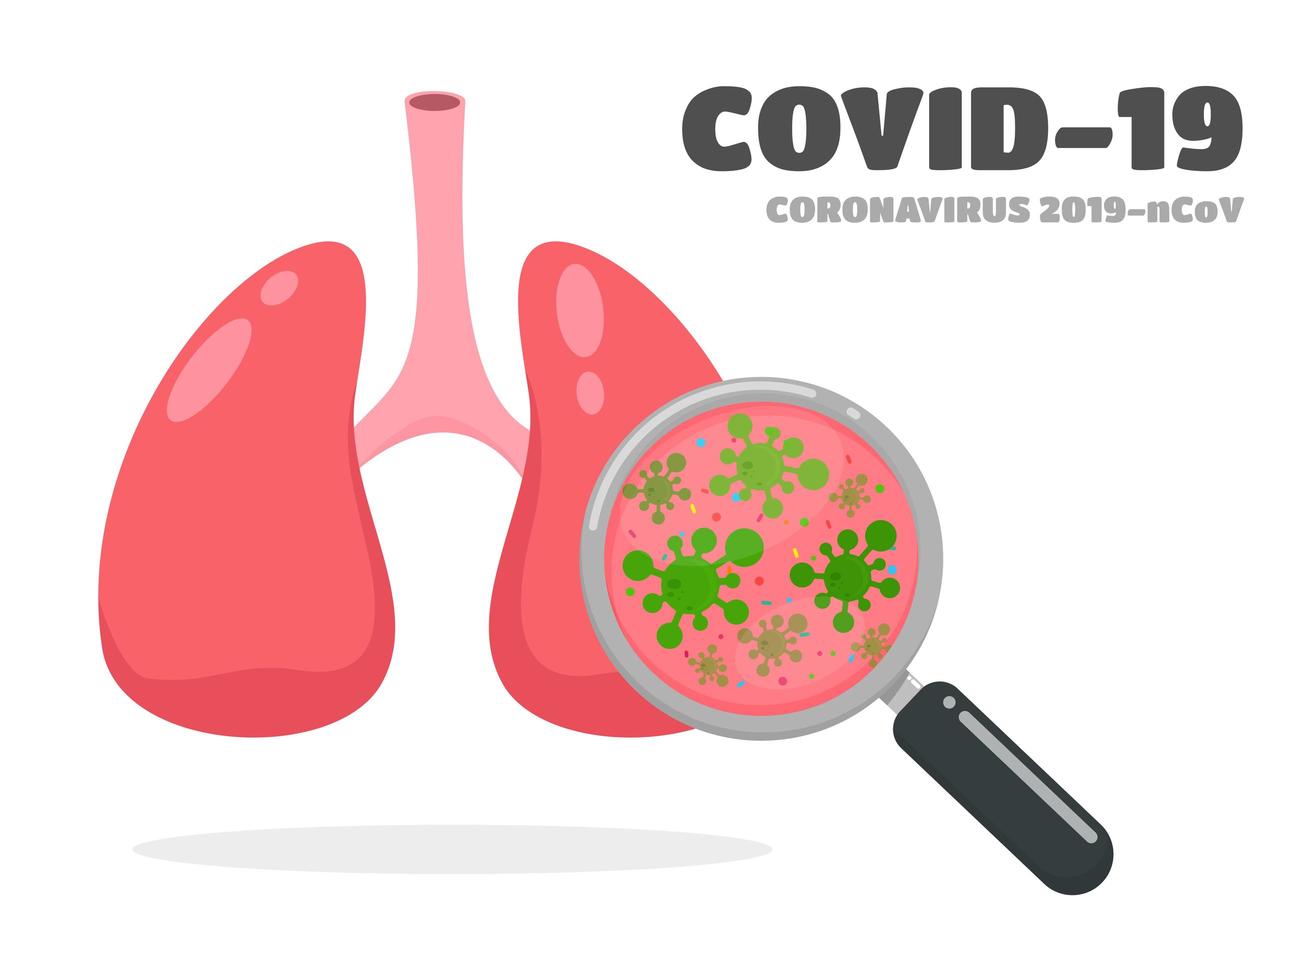 polmoni covid-19 o coronavirus vettore